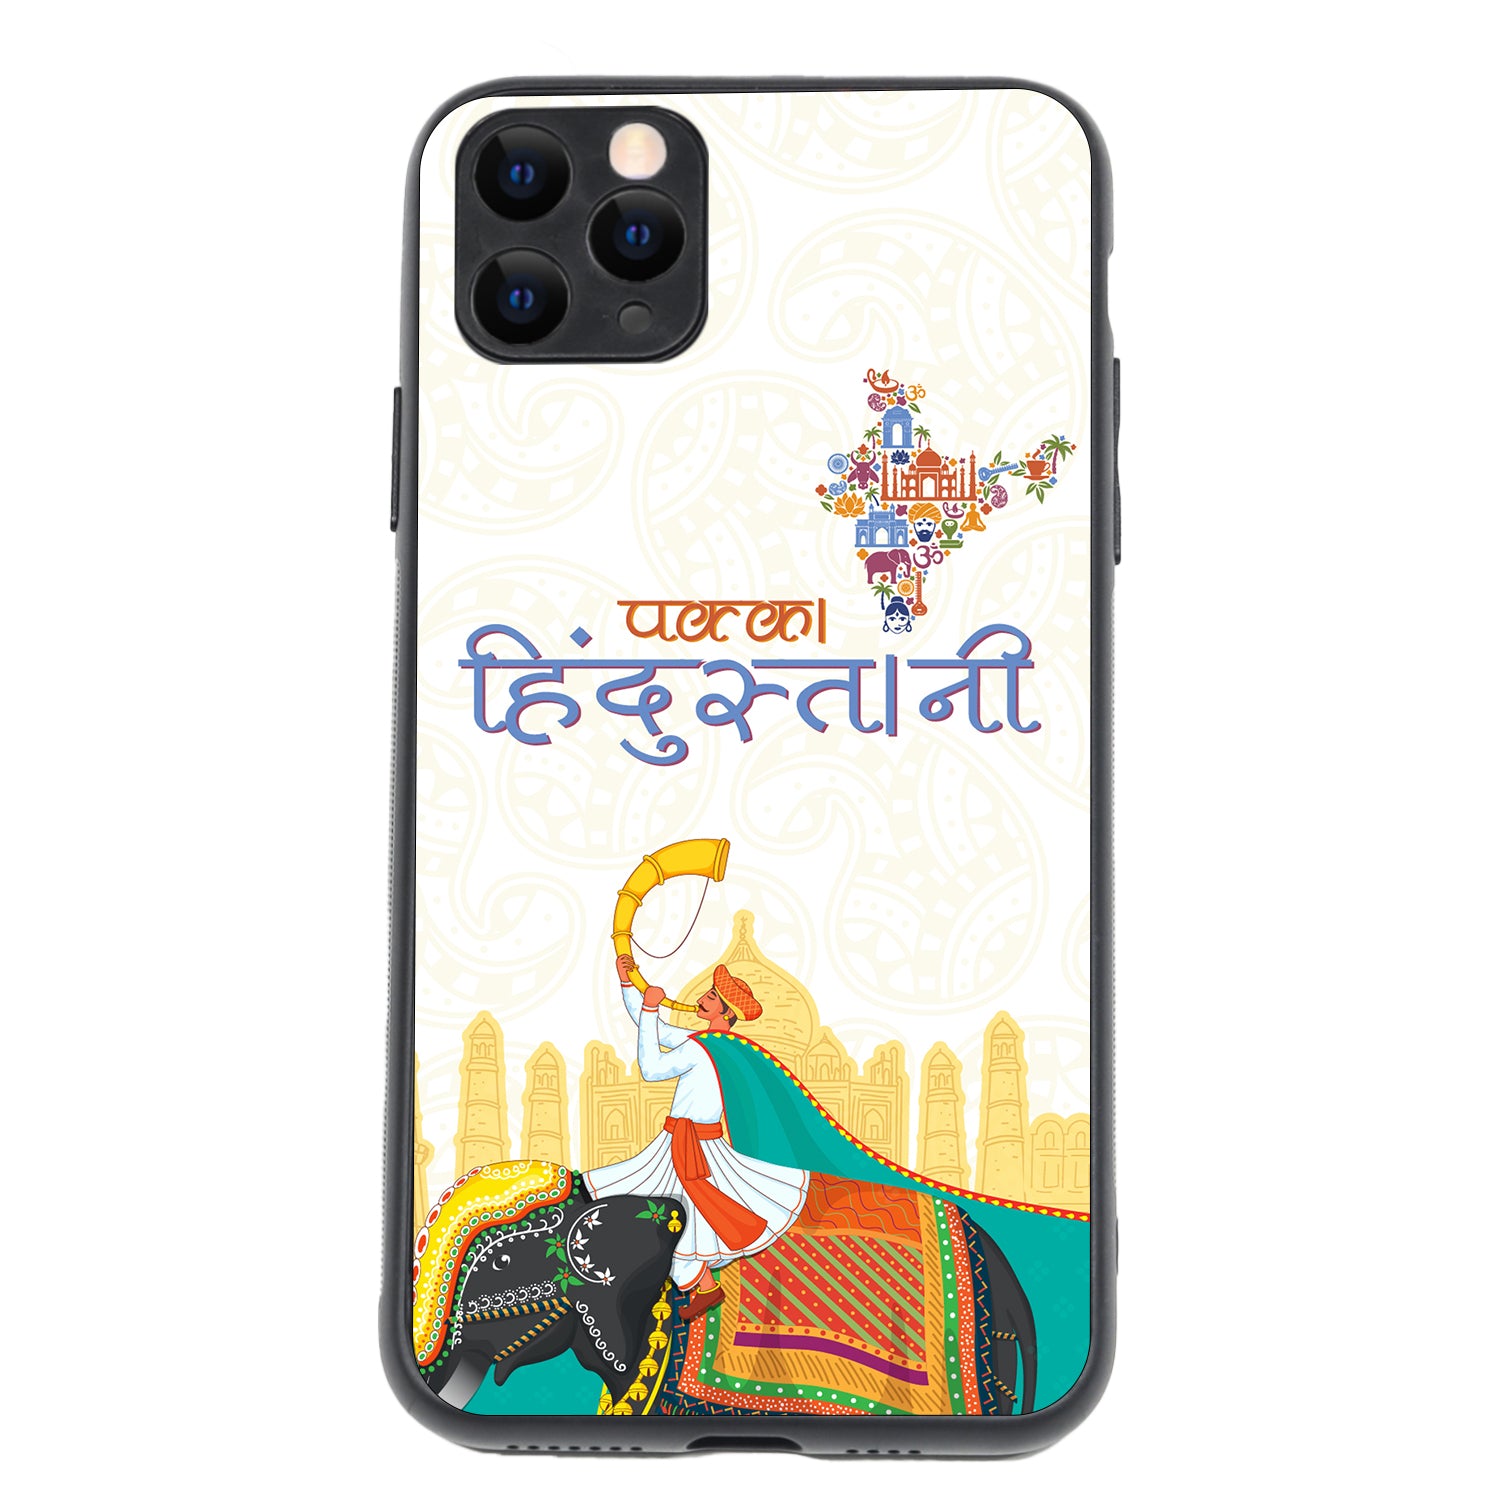 Pakka Hindustani Indian iPhone 11 Pro Max Case